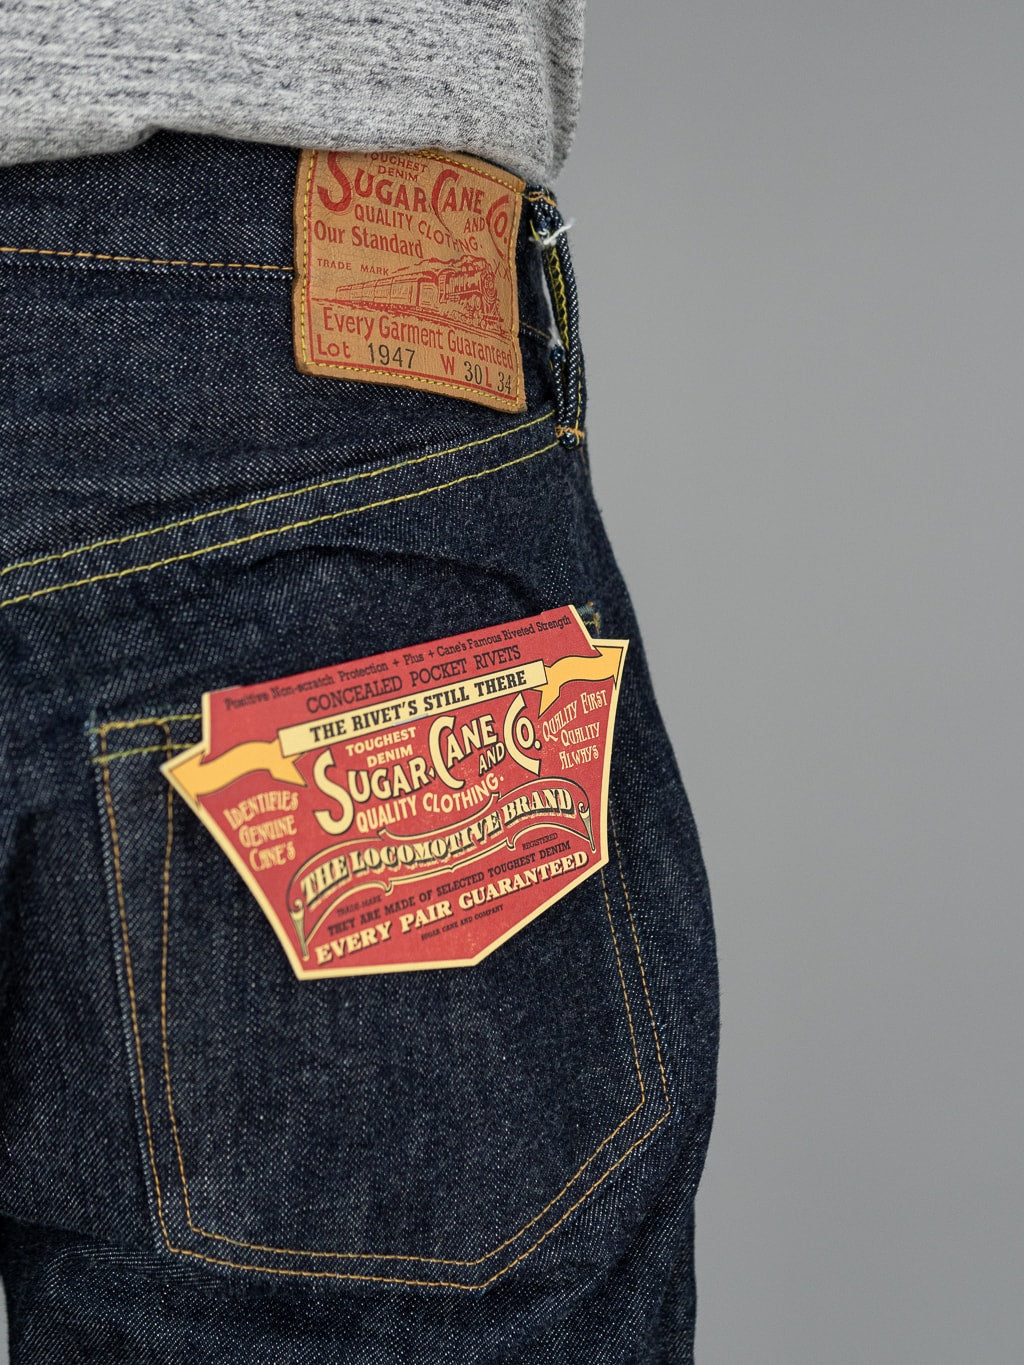 sugar cane SC41947 14.25oz denim 1947 model regular straight jeans pocket